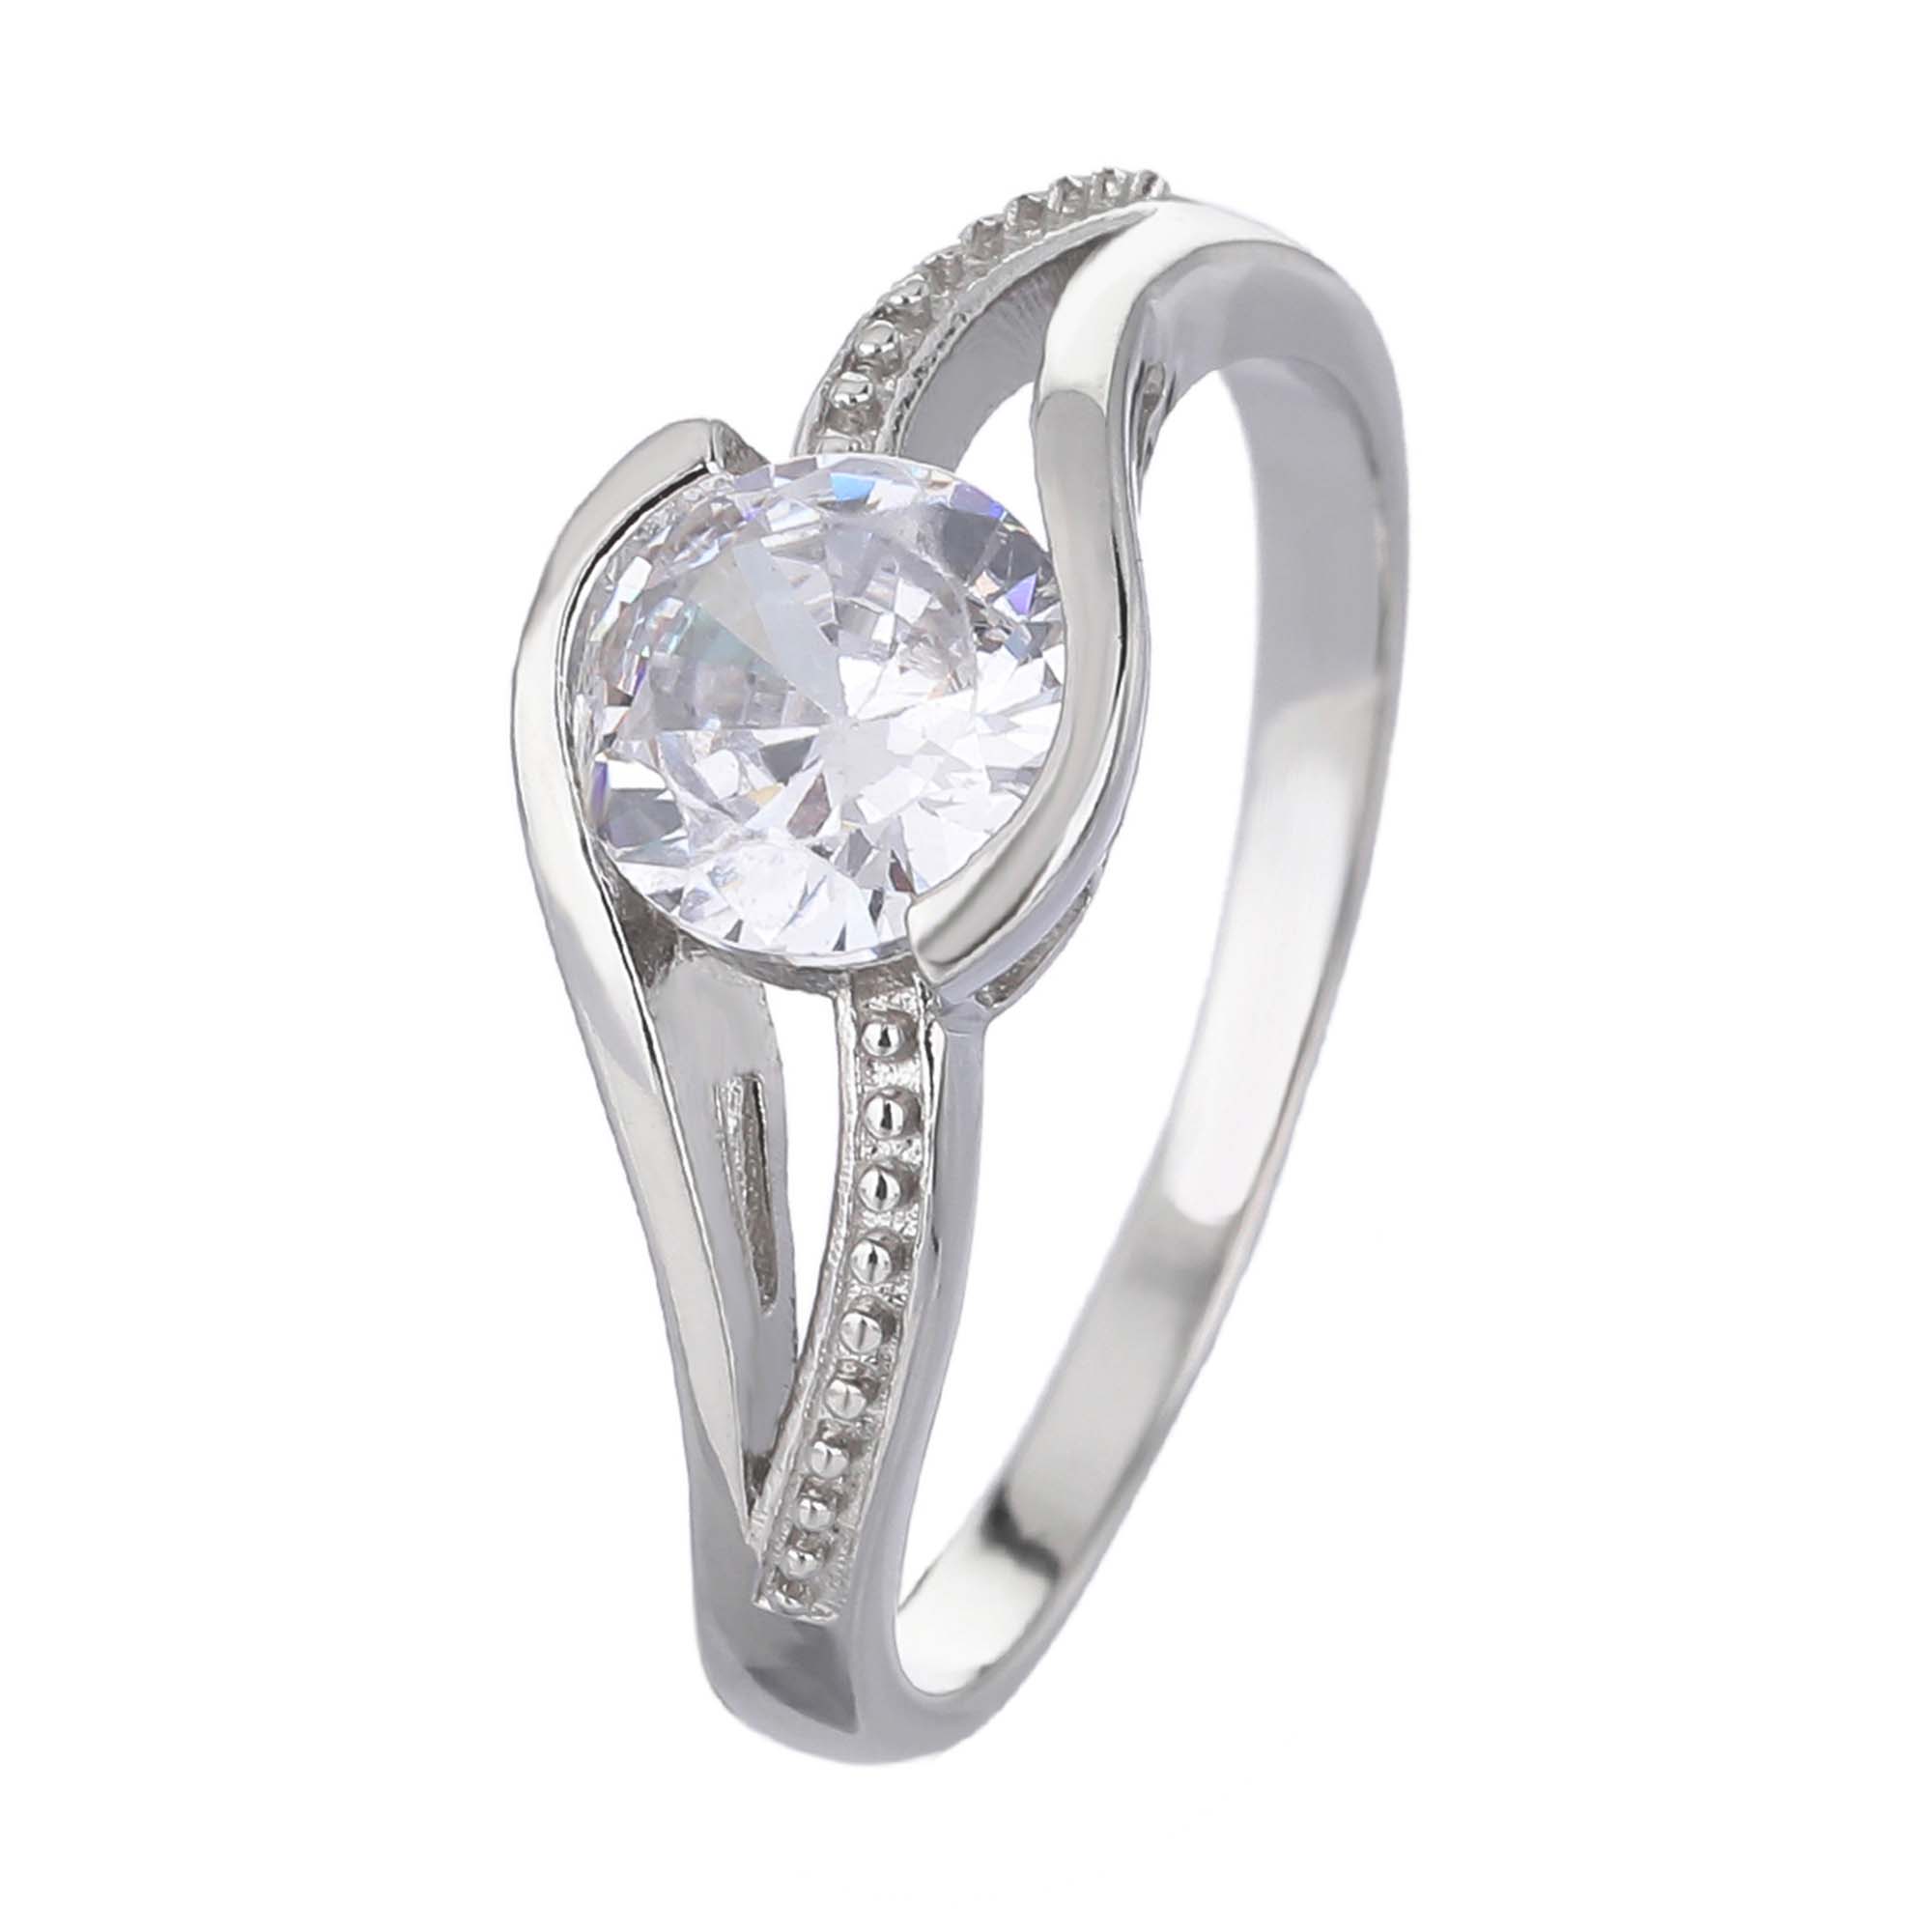 Stříbrný prsten SOLITÉR bílý VLNKY Velikost prstenu: 52 Ag 925/1000